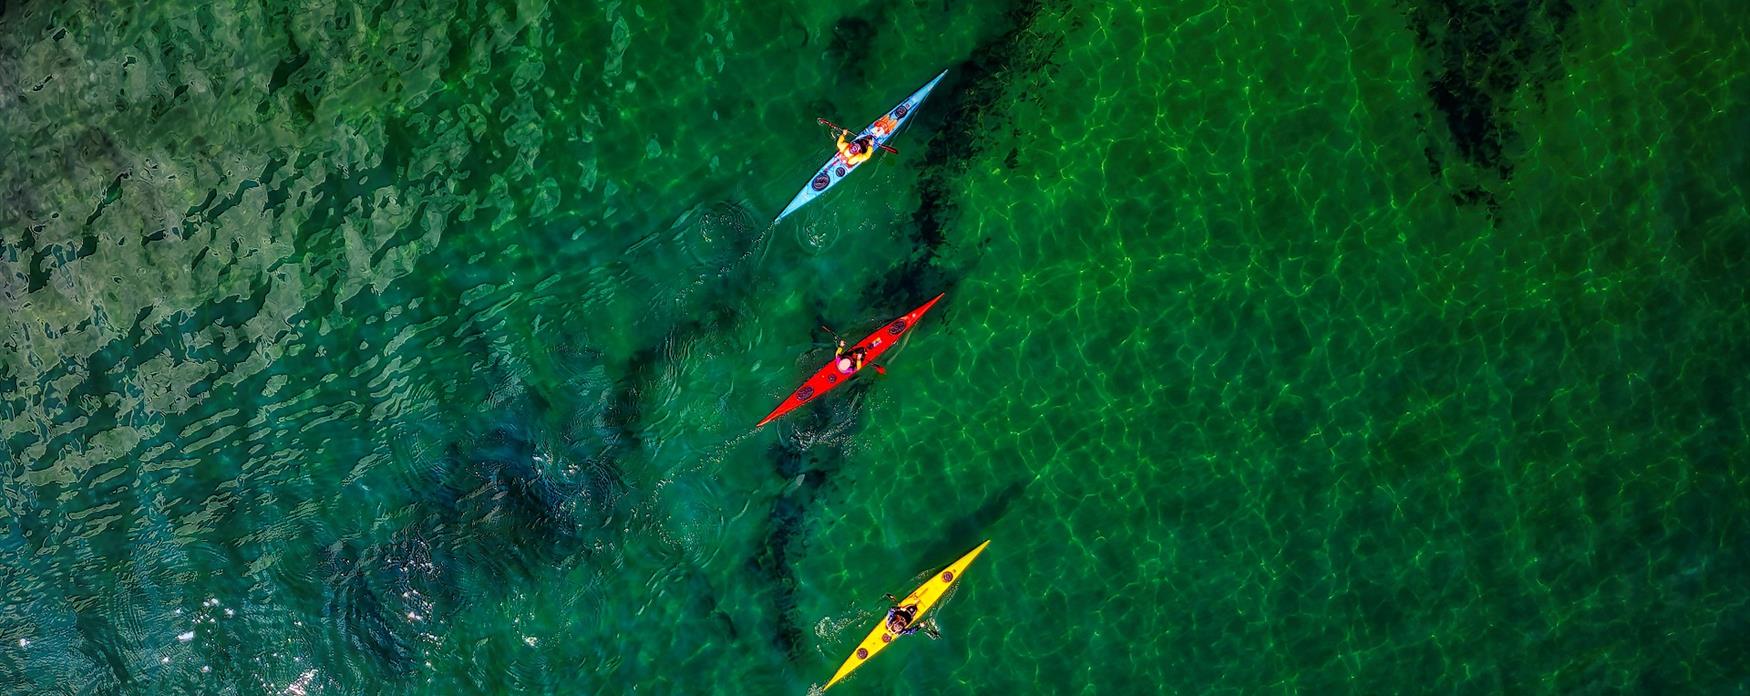 kayaking overhead east devon